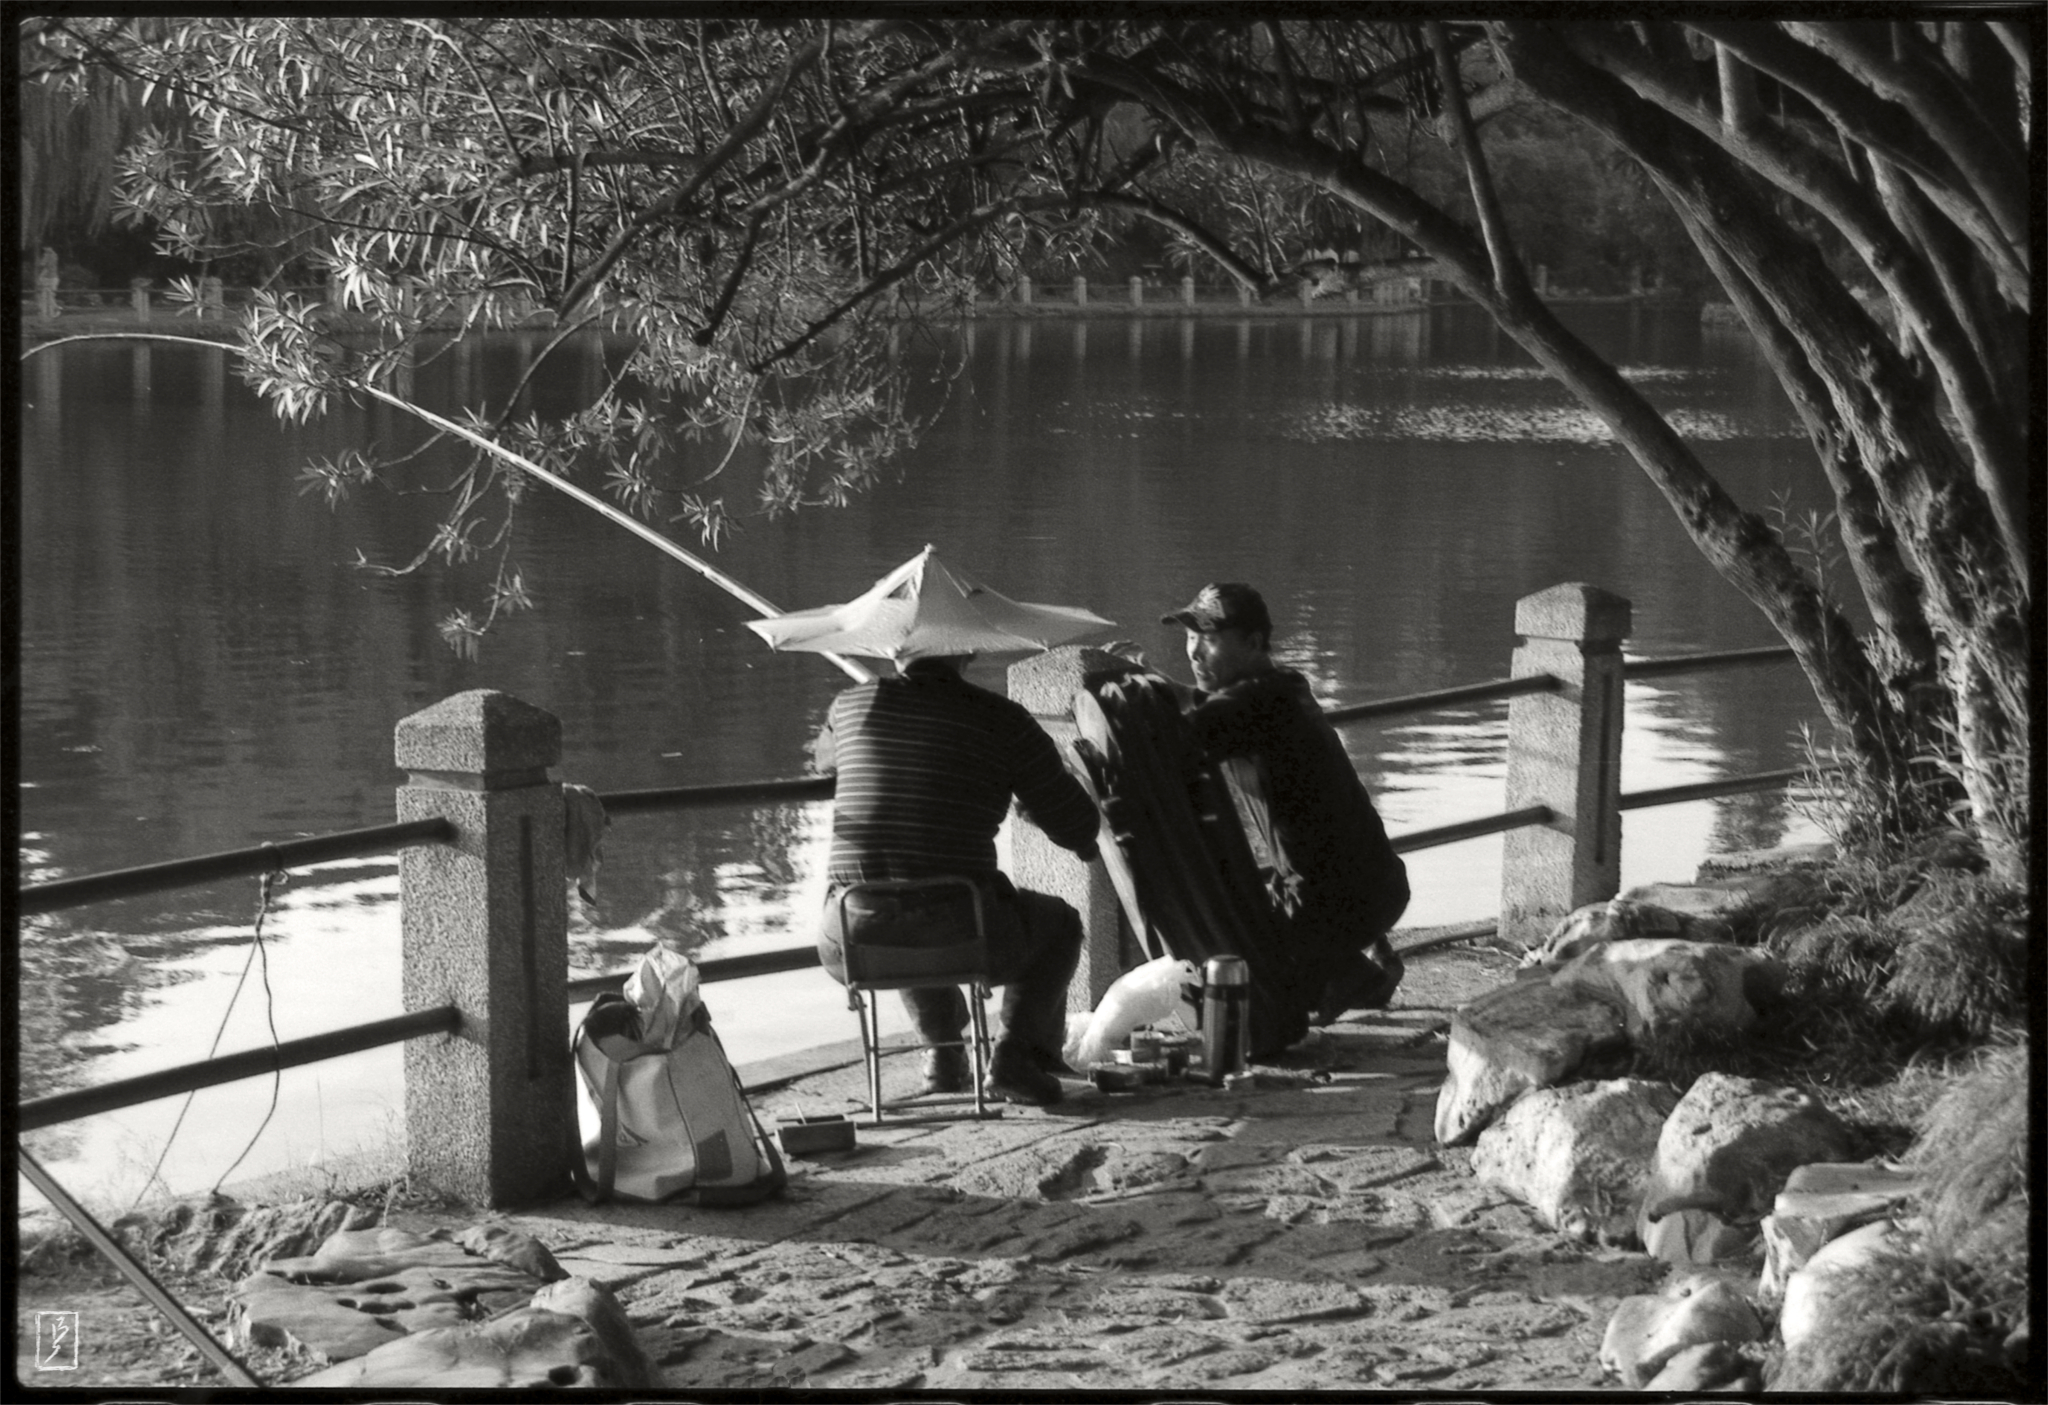 Lu Xun park (鲁迅公园): Angler with an umbrella-like hat.